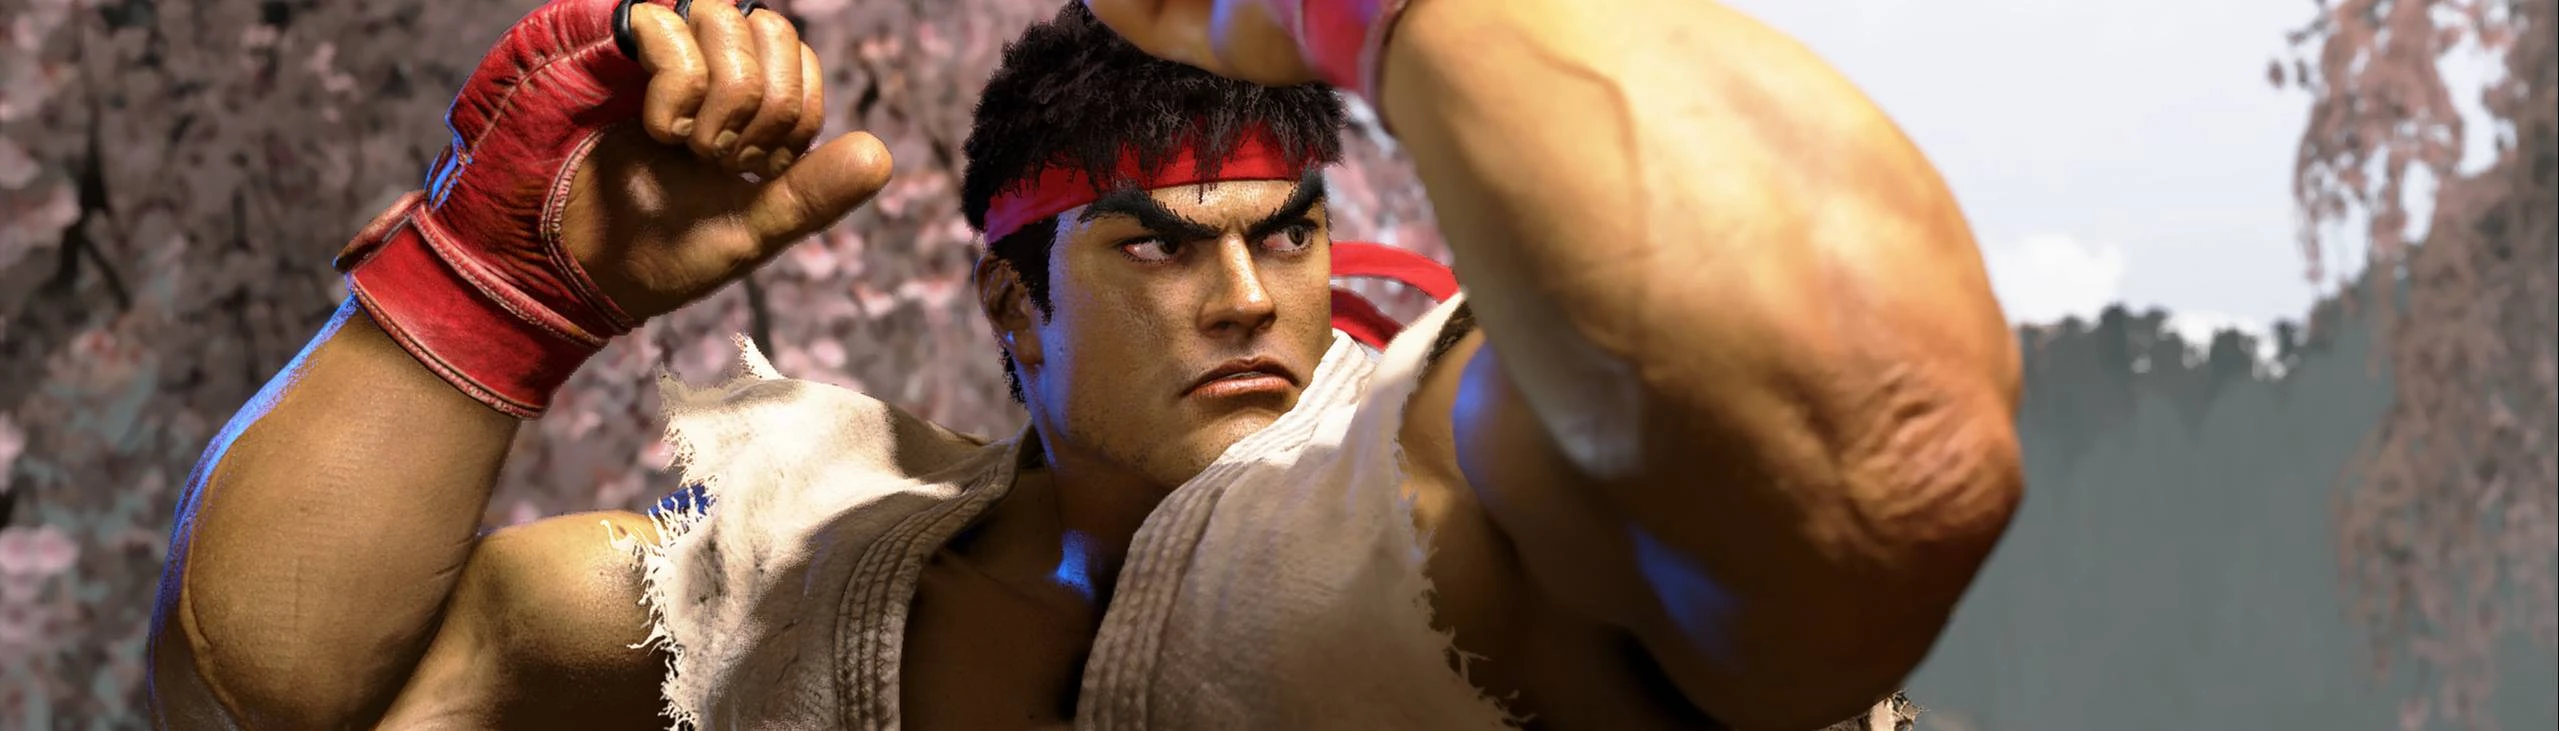 Steam Workshop::Ryu Street Fighter 6 (classic)